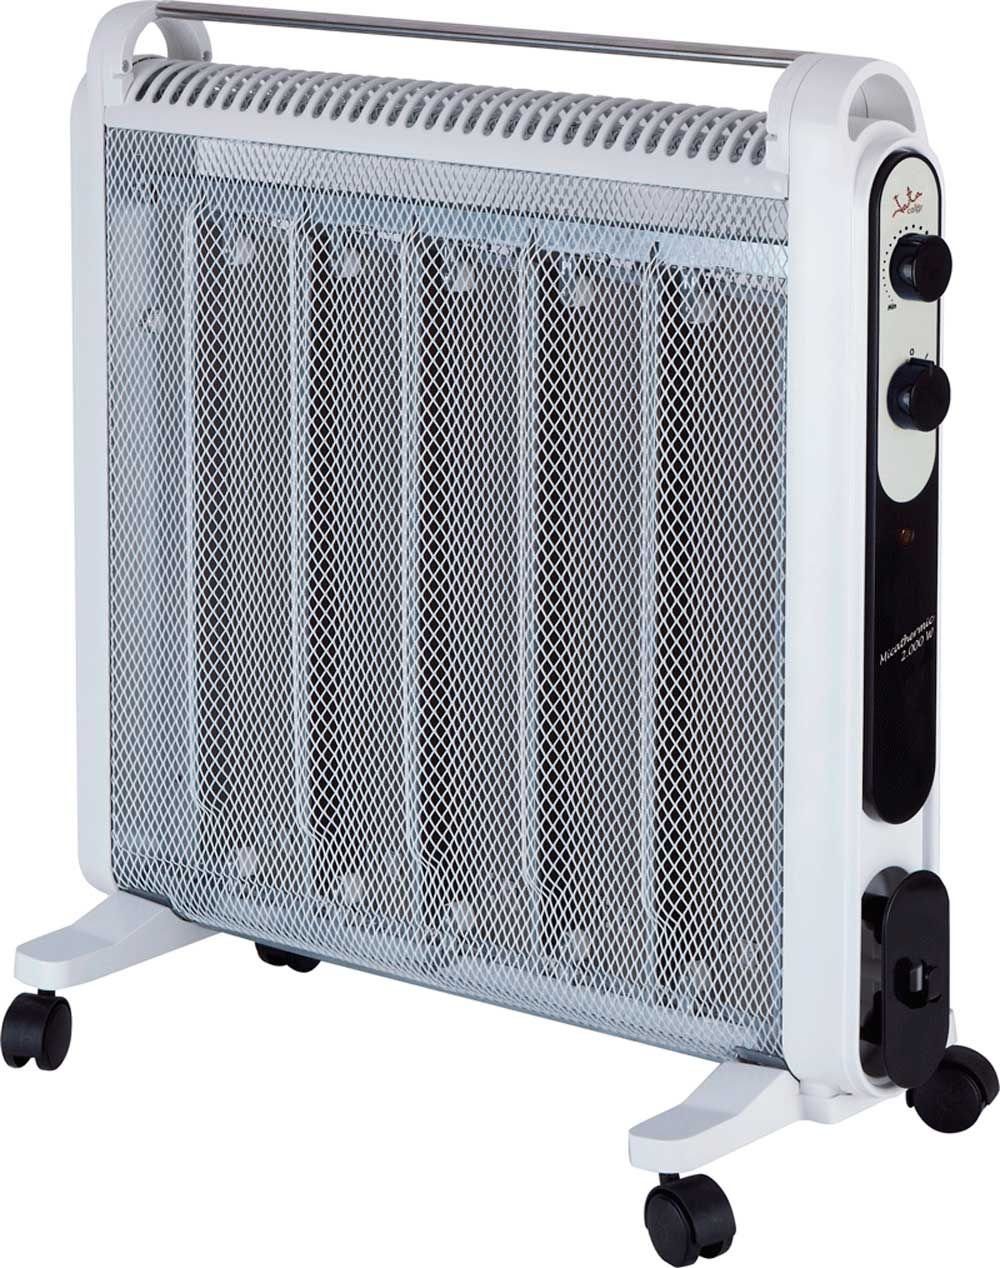 Jata Heizgerät Micathermic Heater RD227B 2000W, 2000 W, Leise, Lautlos, Sparsam, Energie sparen, Elektroheizung | Heizlüfter